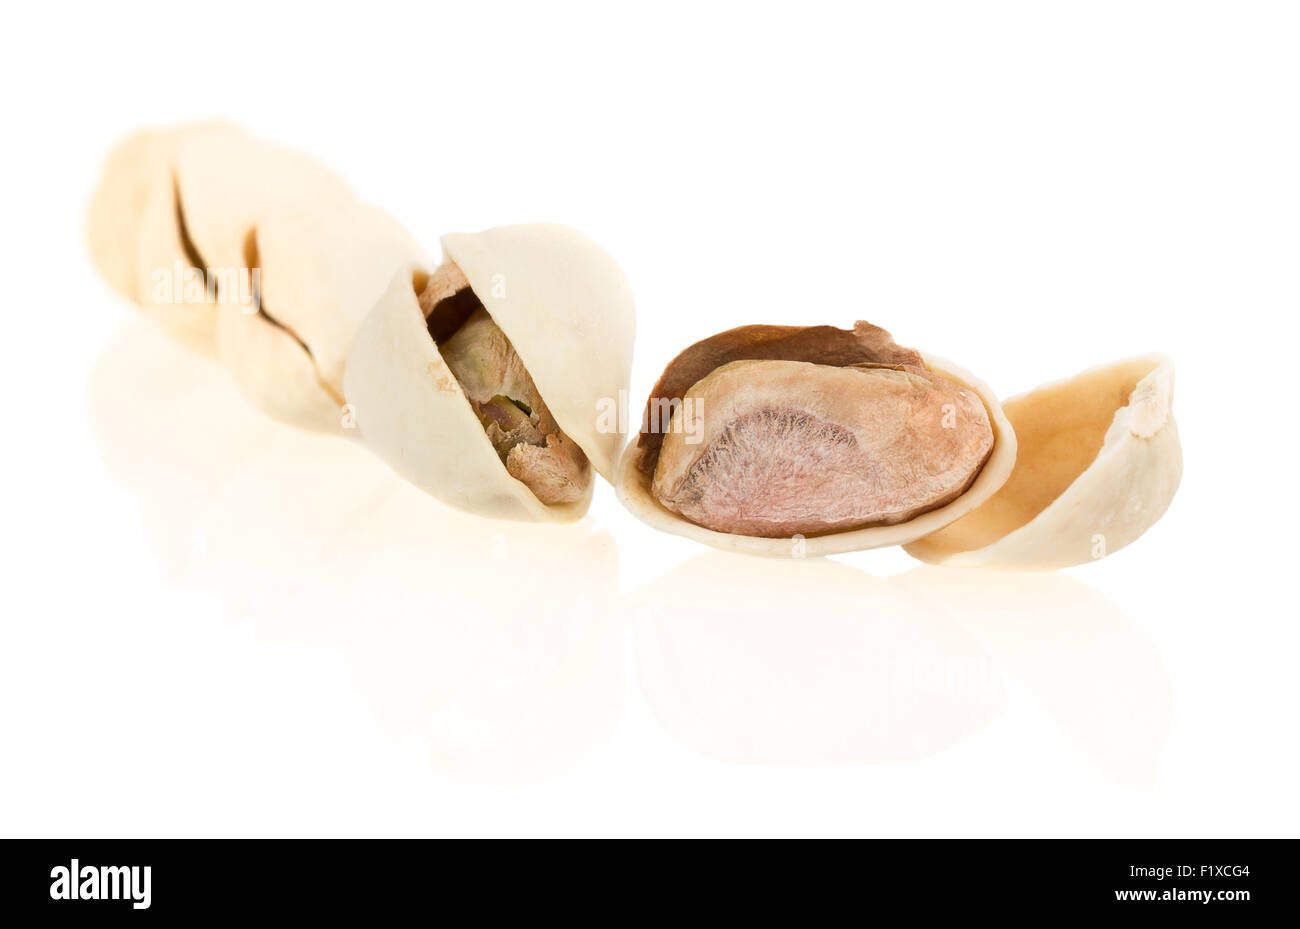 Pistachio nuts, fruits isolated on white background. Stock Photo